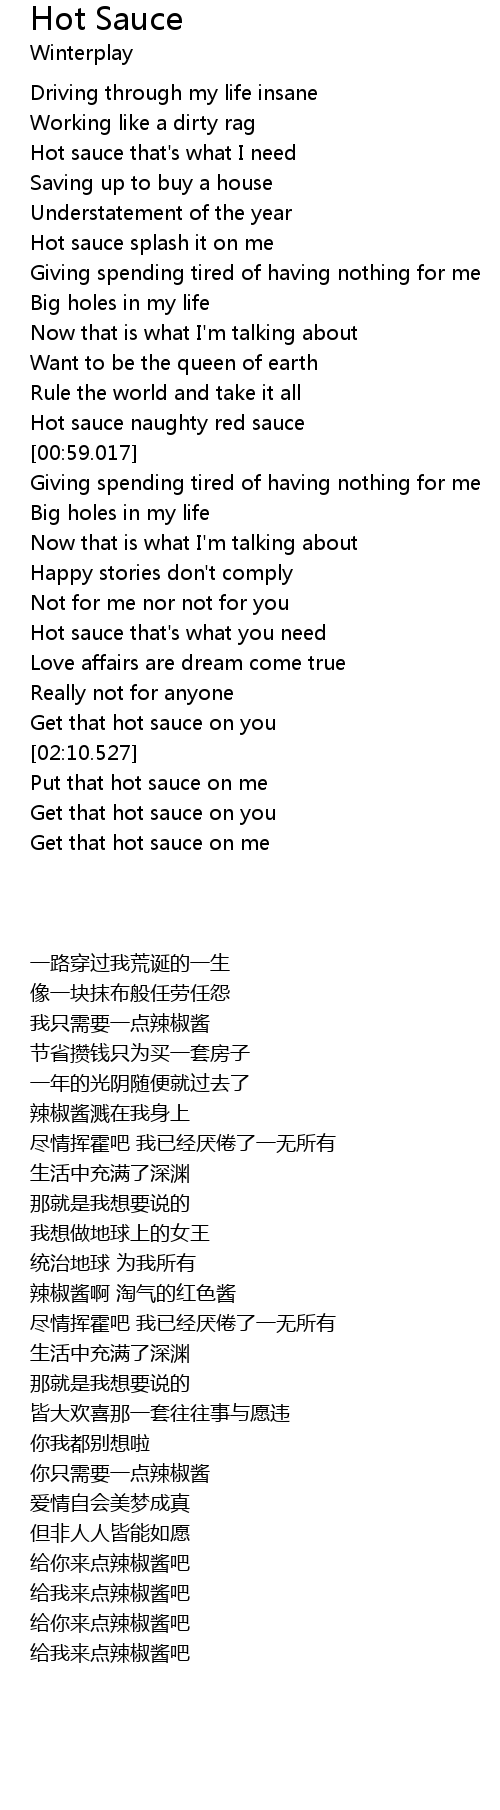 Hot sauce lyrics